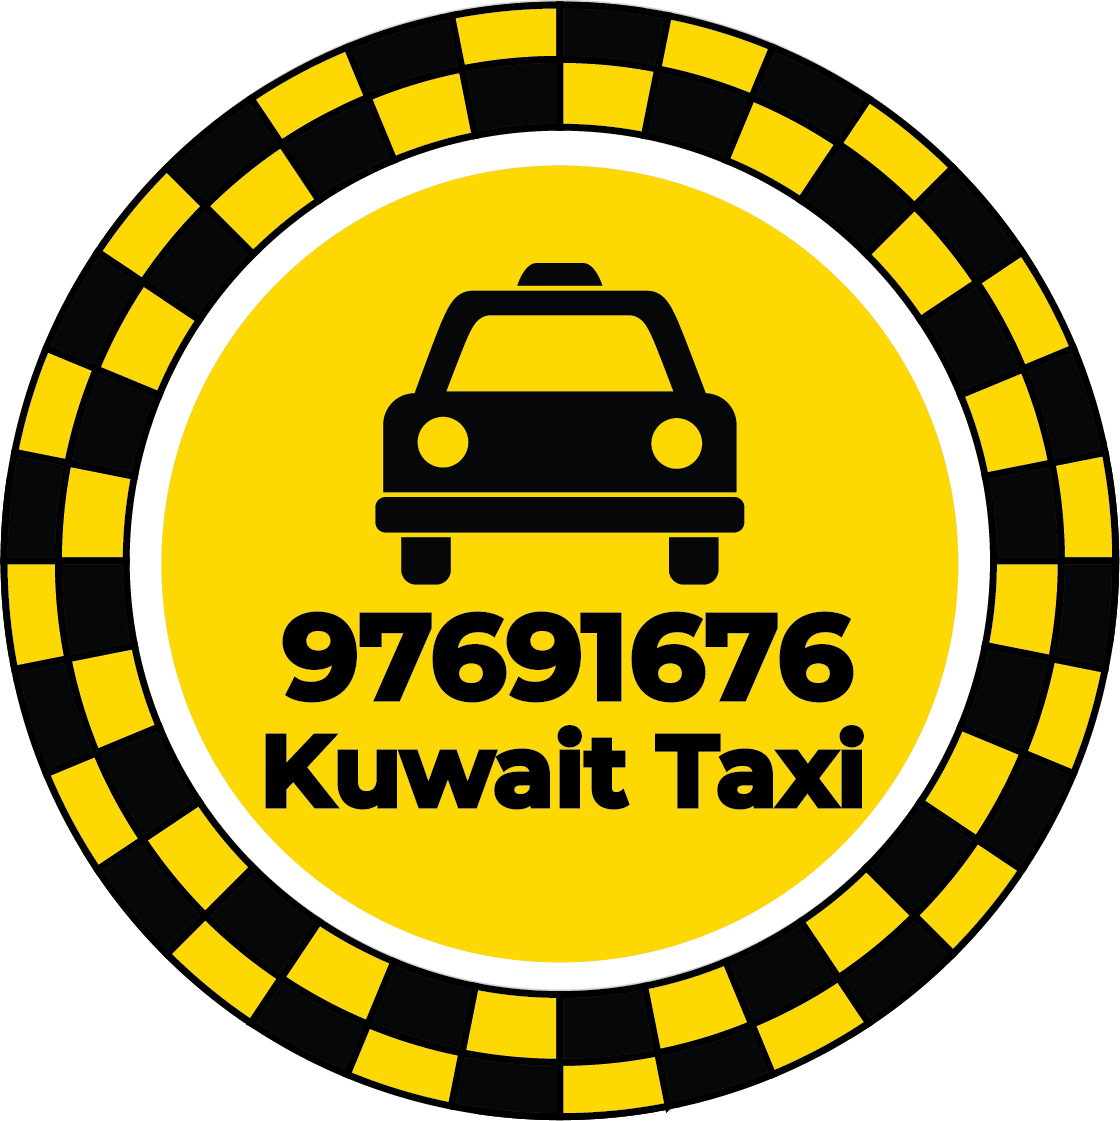 Q Taxi Kuwait - Q Taxi Number 97691676